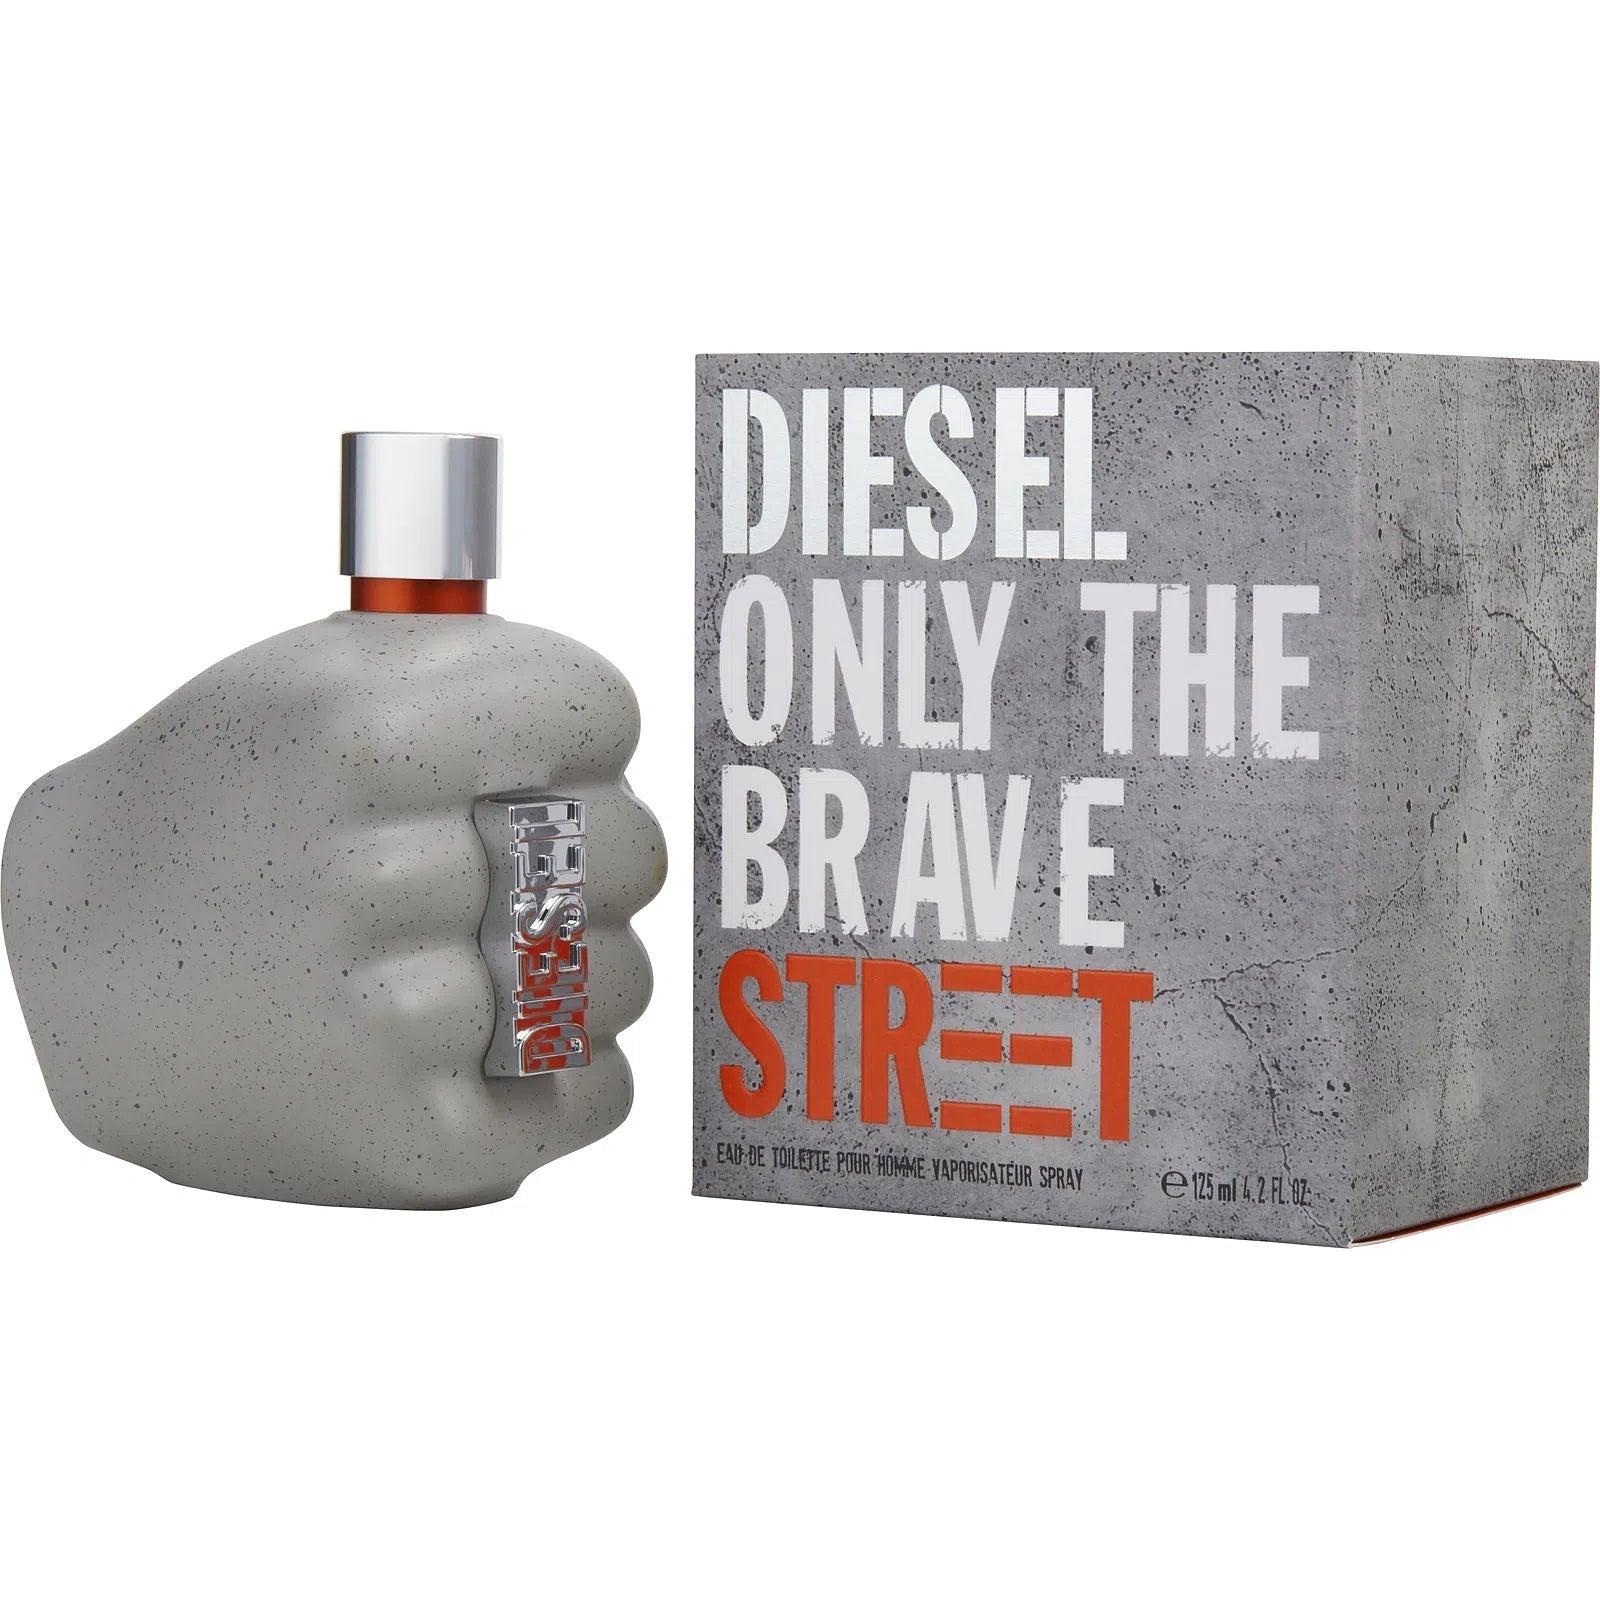 Perfume Diesel Only The Brave Street EDT (M) / 125 ml - 3614272320833- Prive Perfumes Honduras